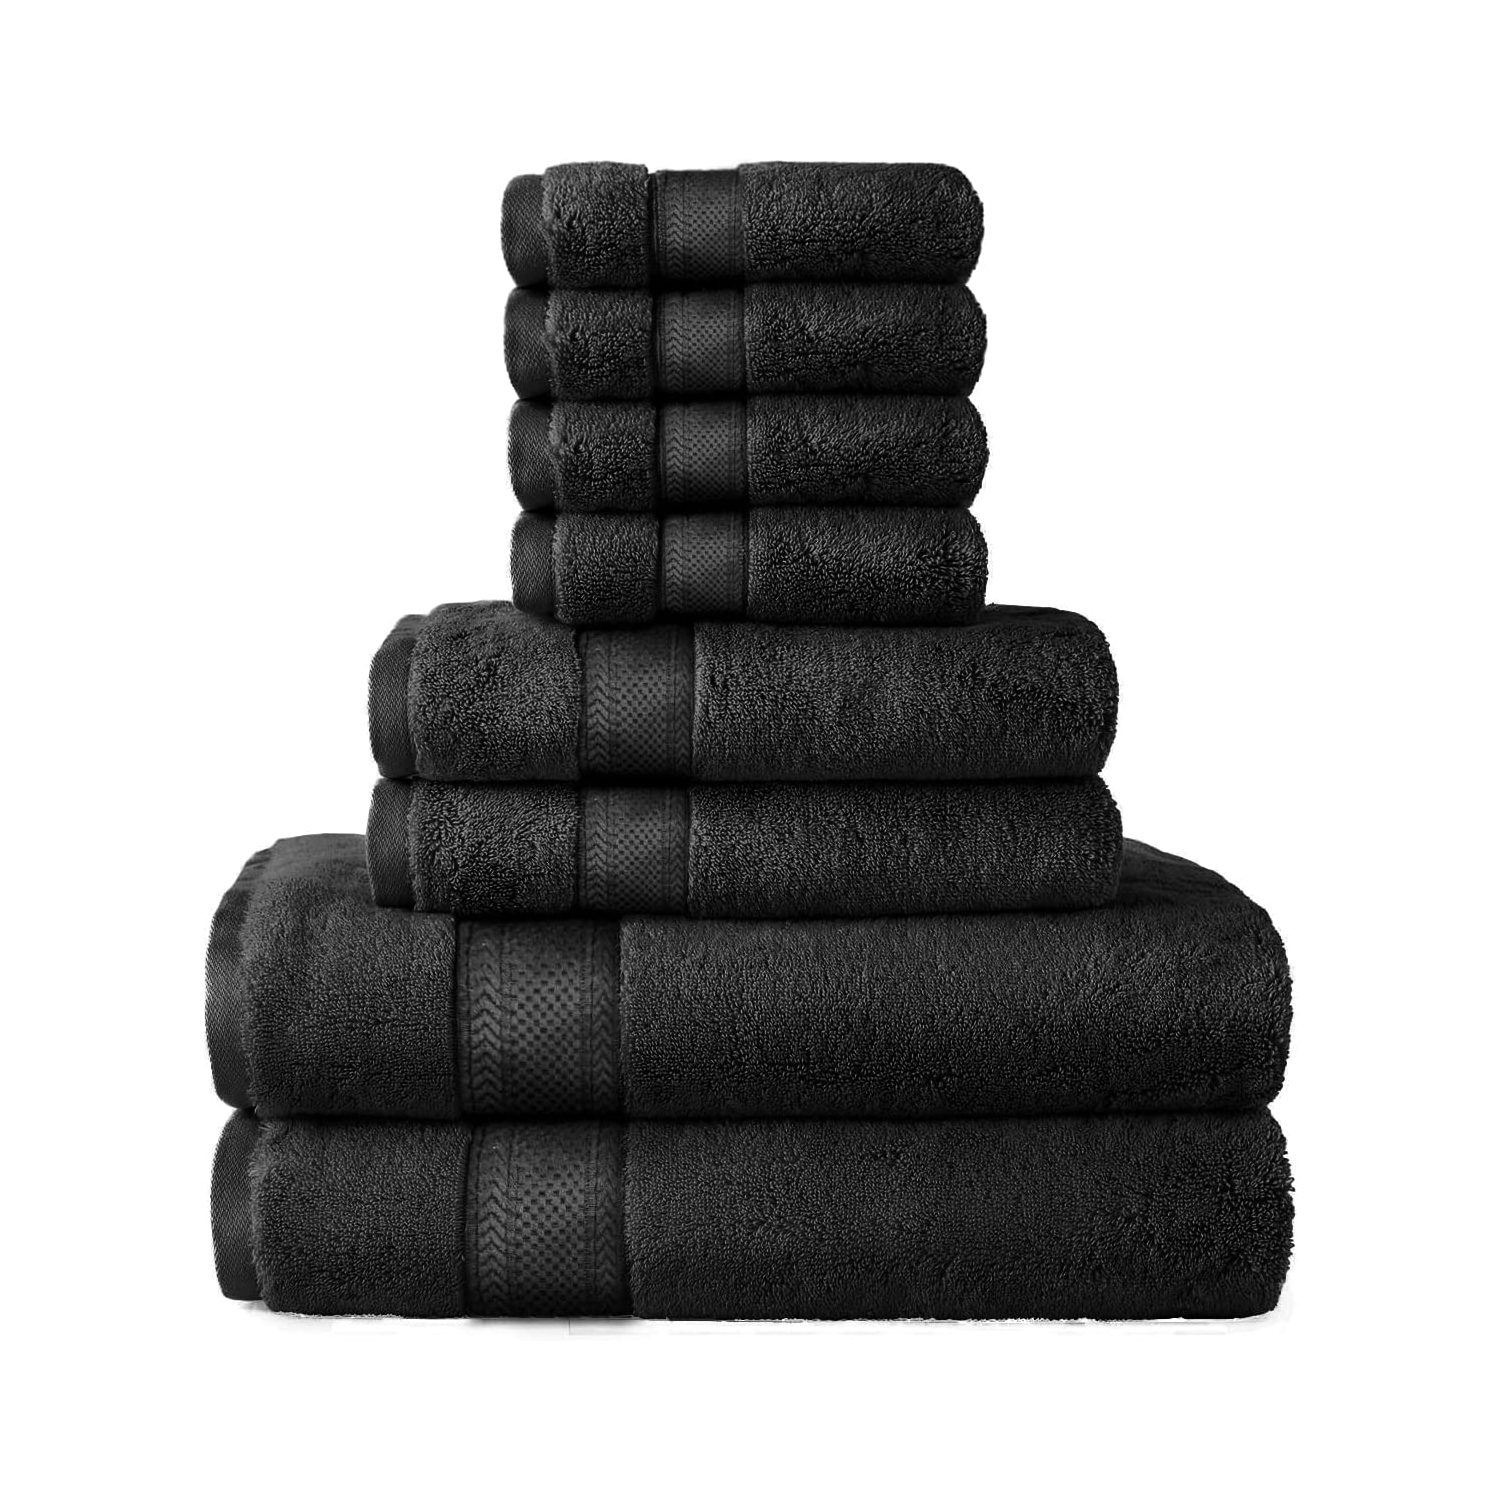 Canadian Linen Luxury Grey Color Bathroom Towel Set 8 Pack, 2 Bath Towels 27"x54" 600 GSM, 2 Hand Towels 16"x27", 4 Wash Cloths 12"x12" Soft Absorbent Aegean Turkish Cotton Towels